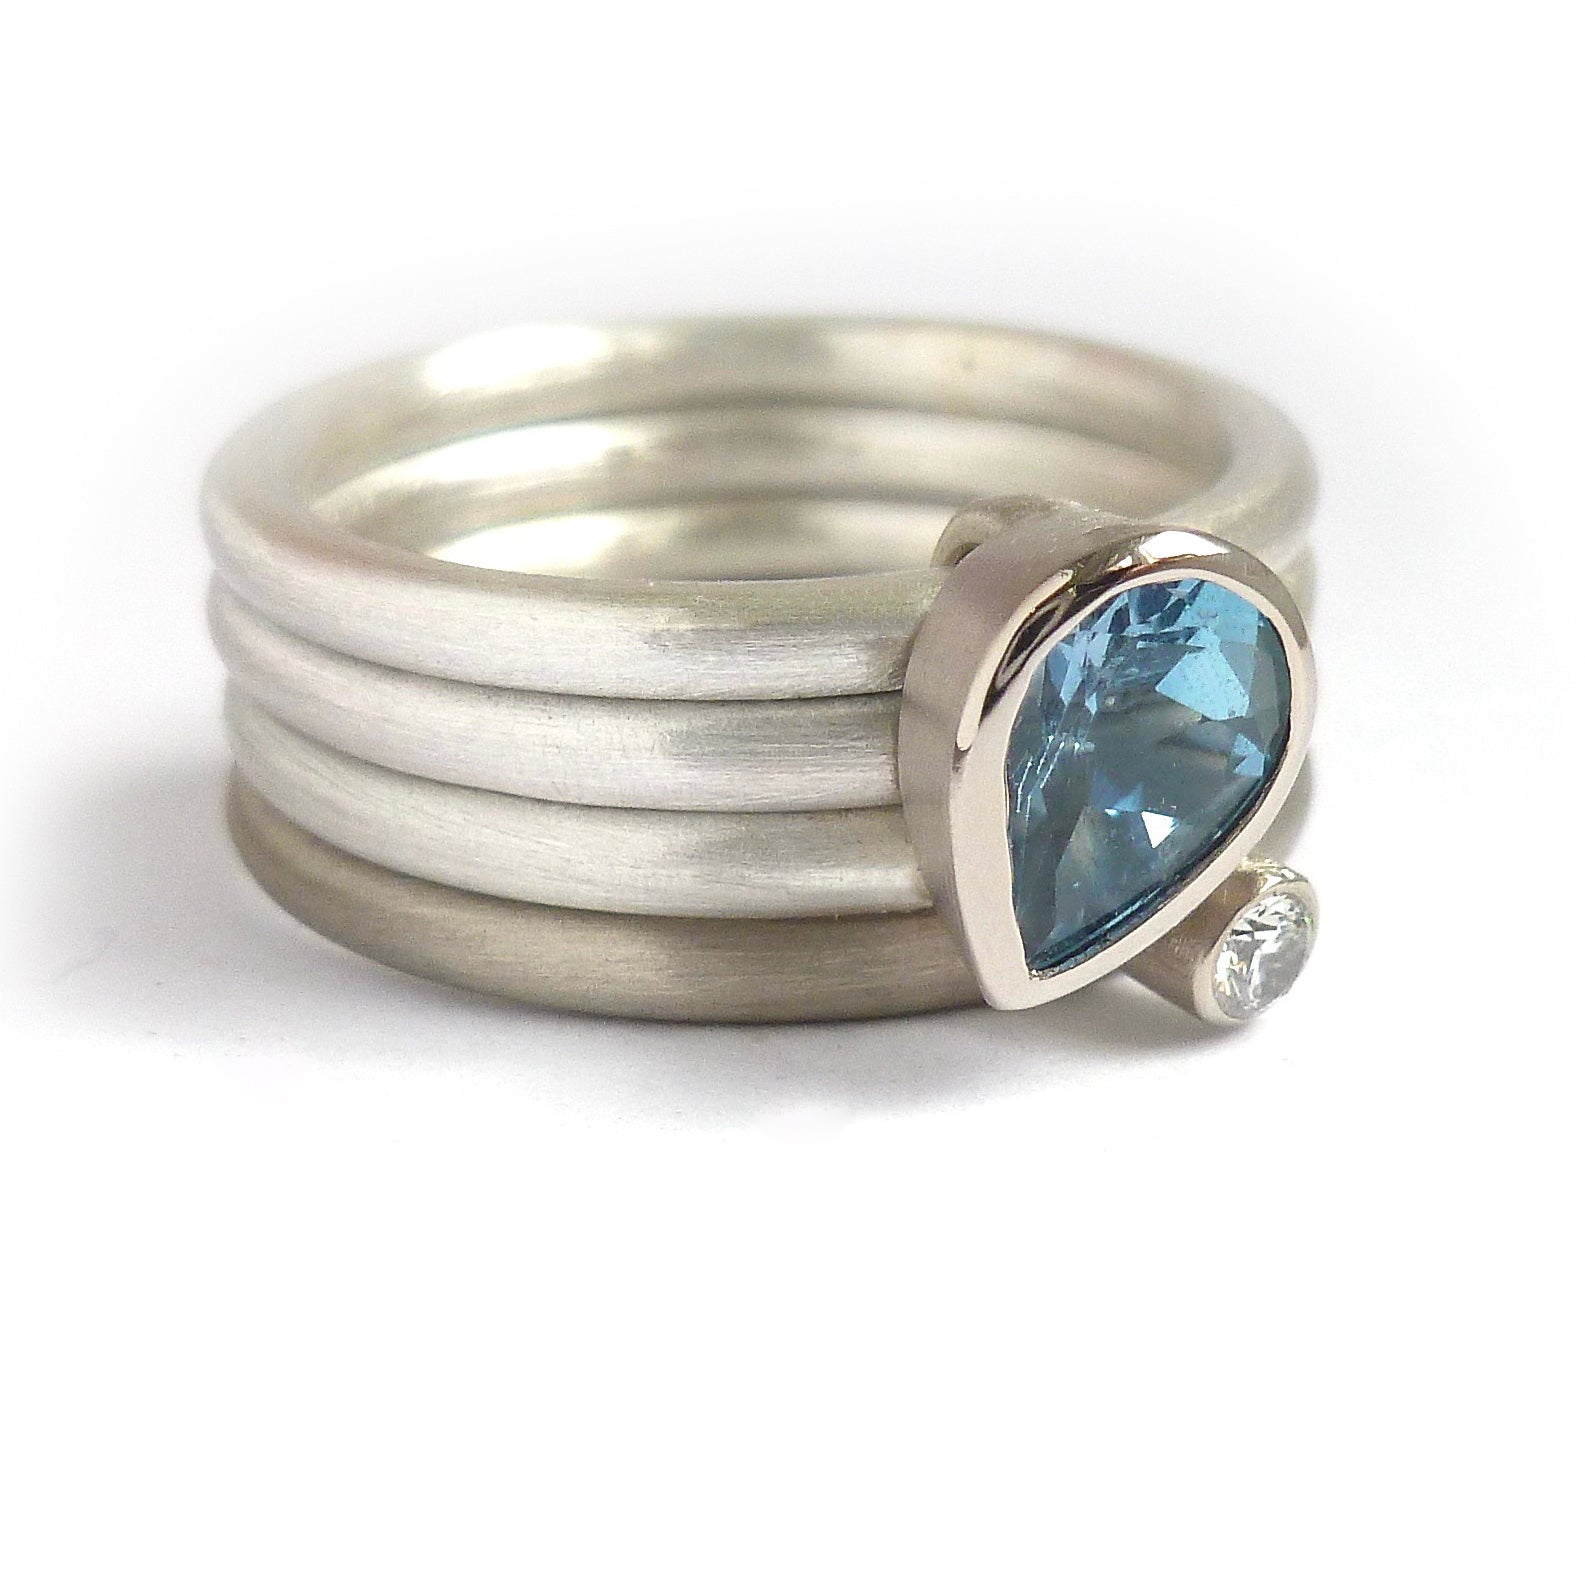 A unique, contemporary aquamarine and diamond gold and silver ring